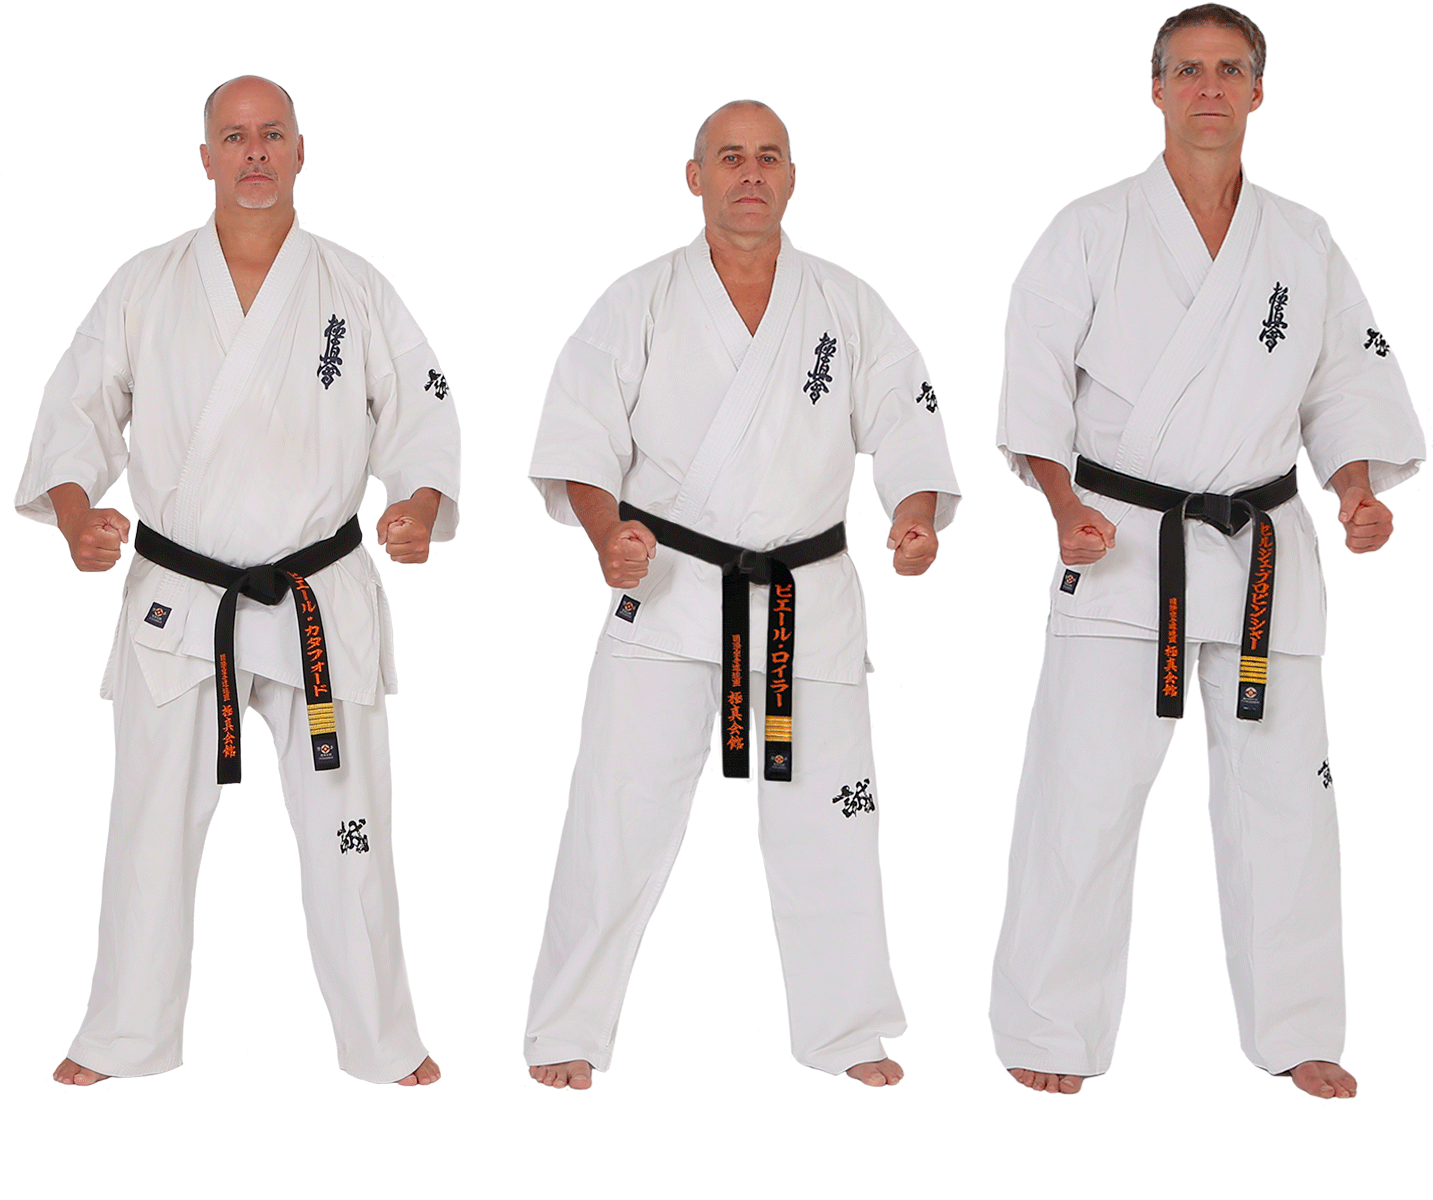 Directeurs de la Federation Karate